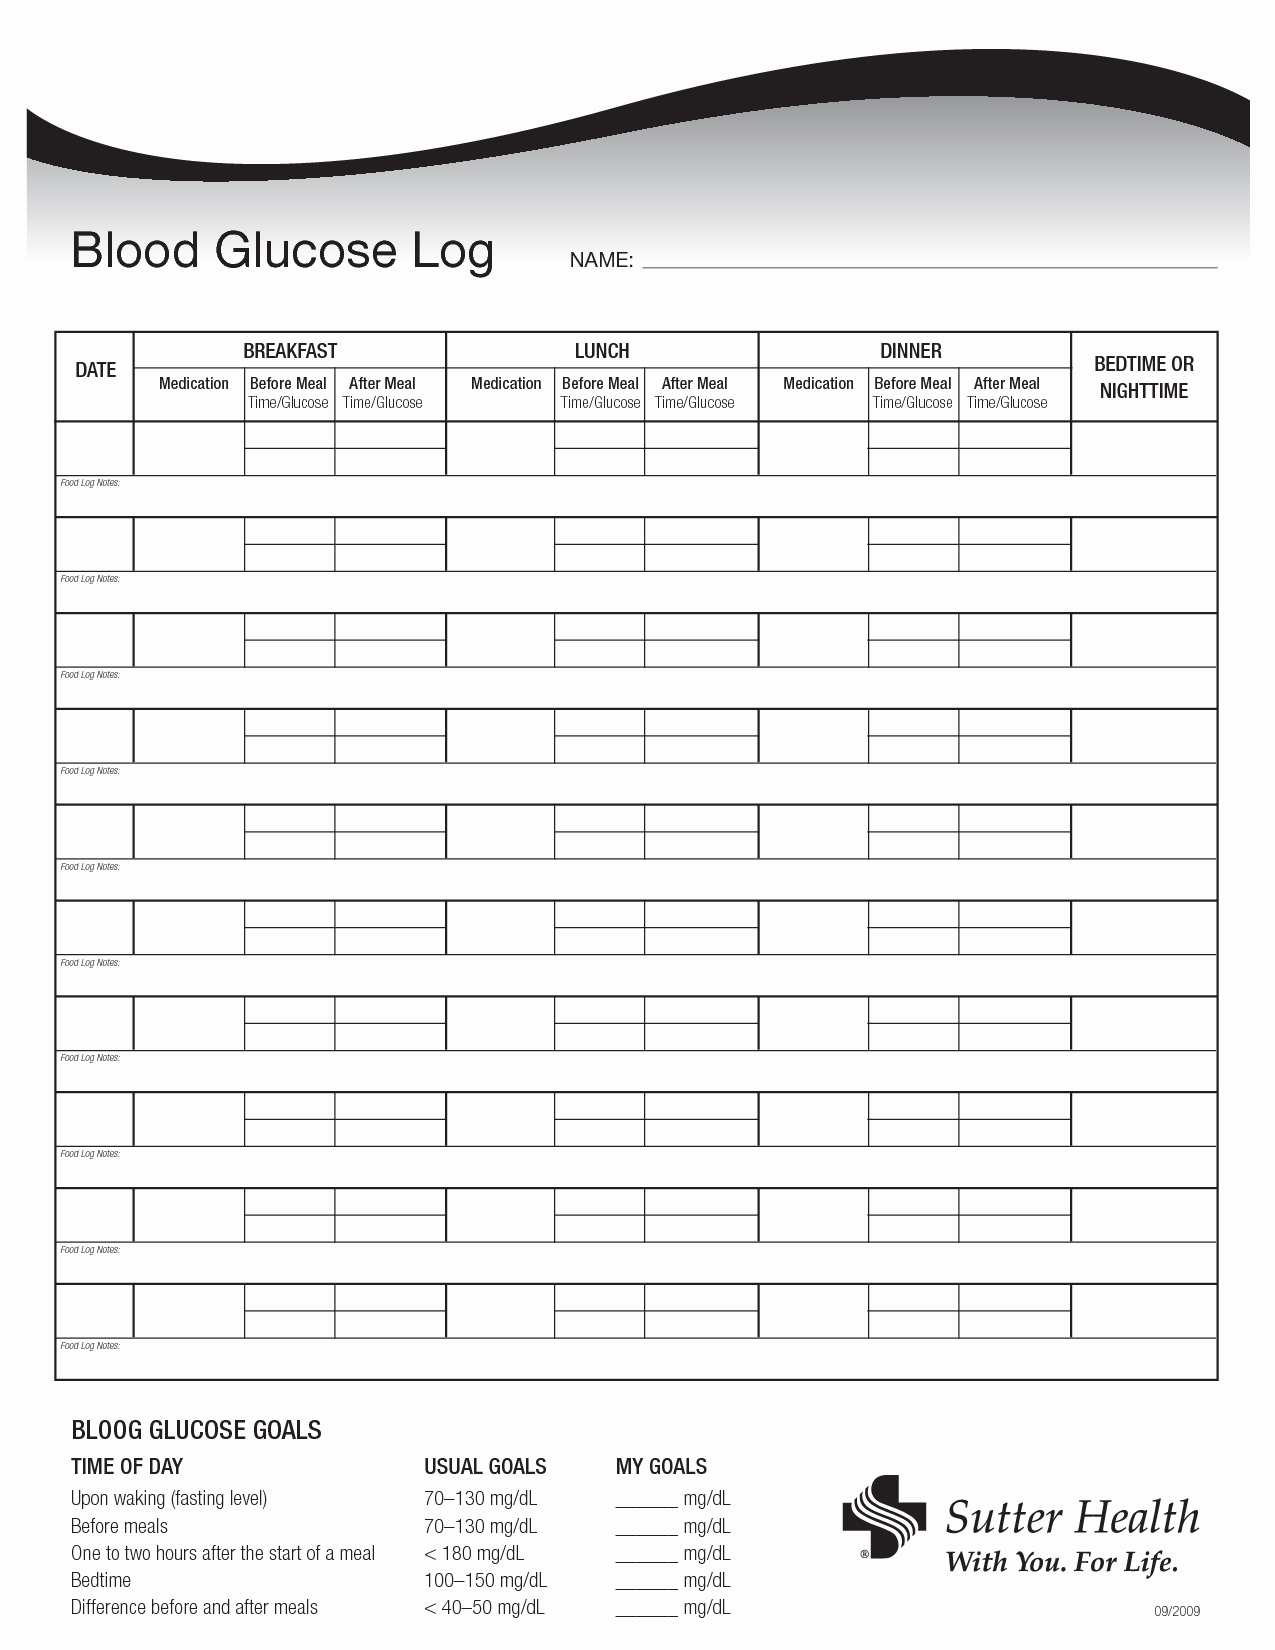 Blood Glucose Log Template New Printable Blood Sugar Log